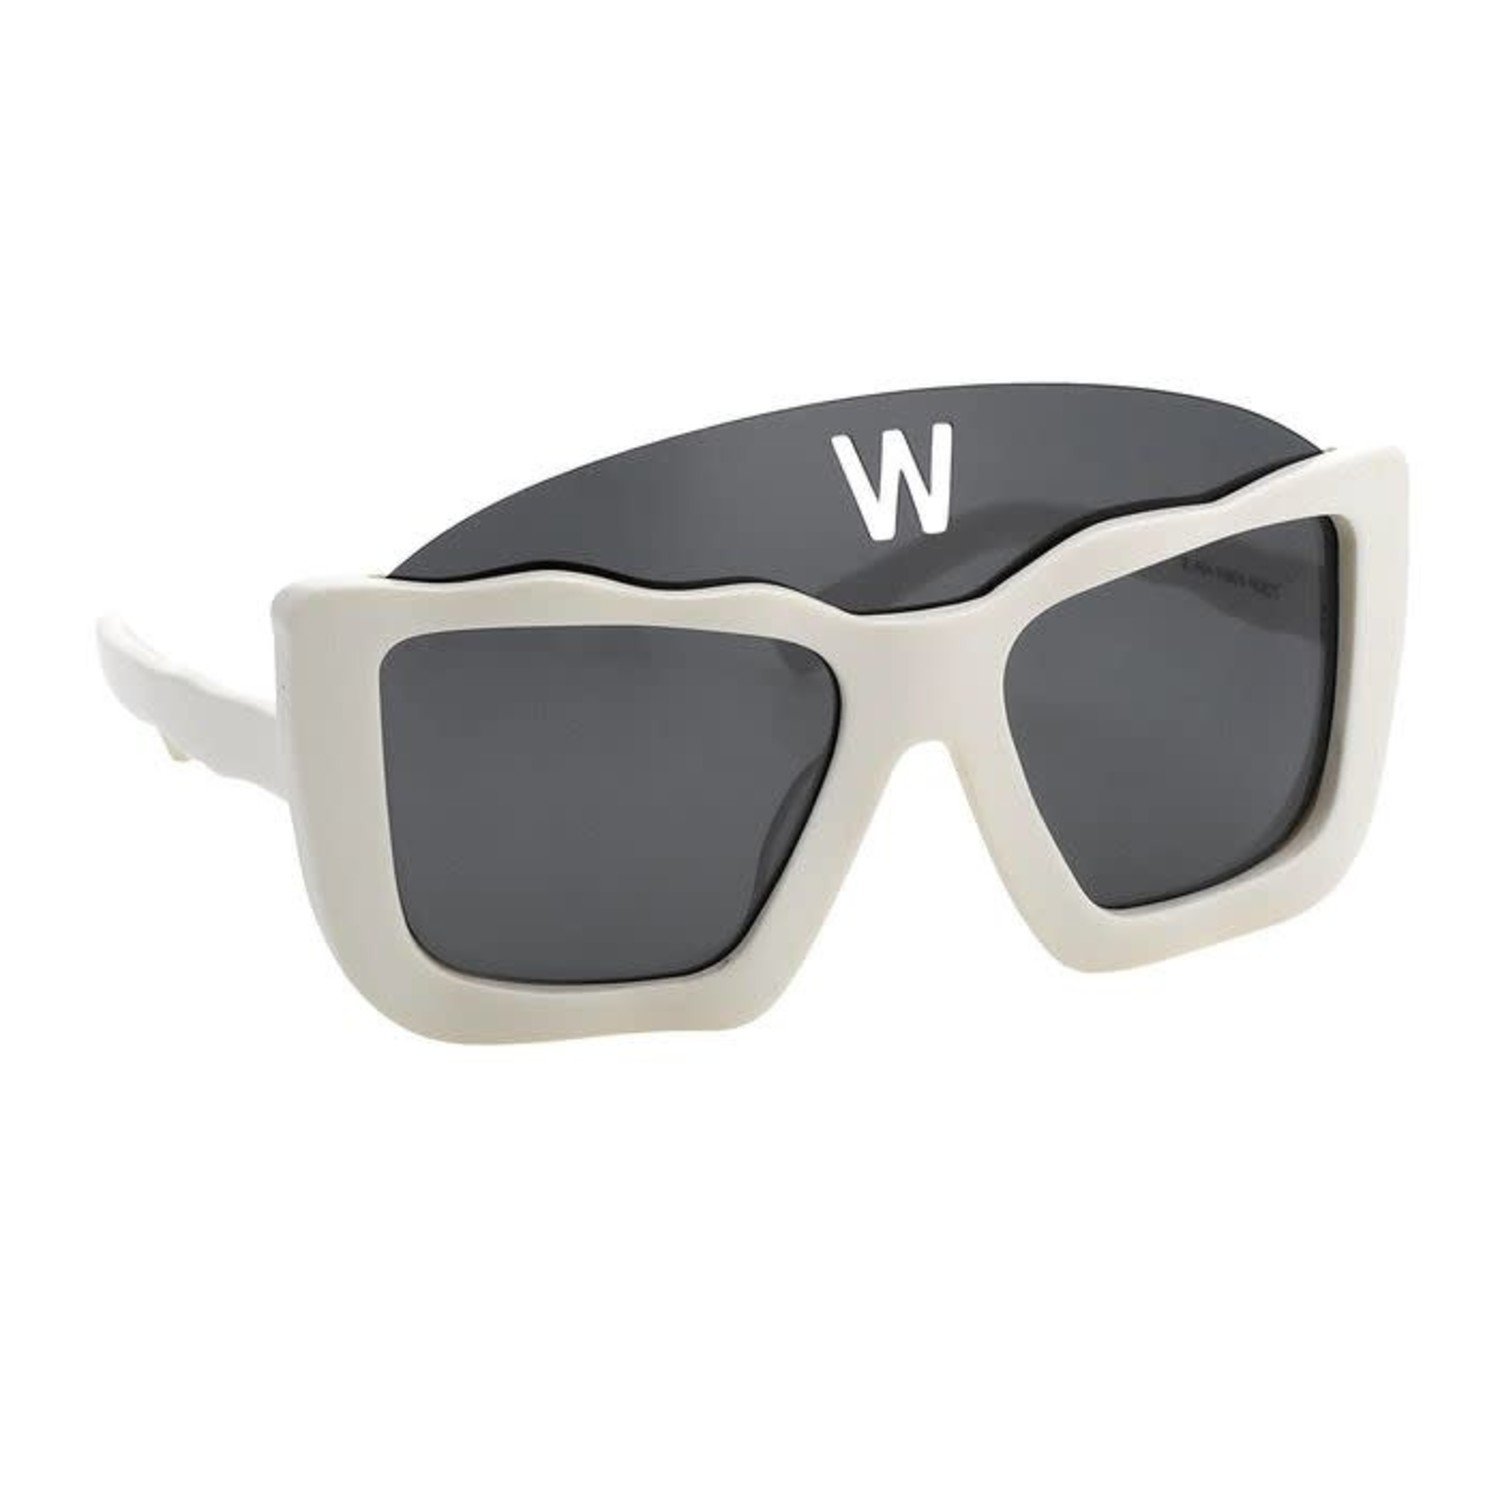 Walter Van Beirendonck x FAKBYFAK joint sunglasses